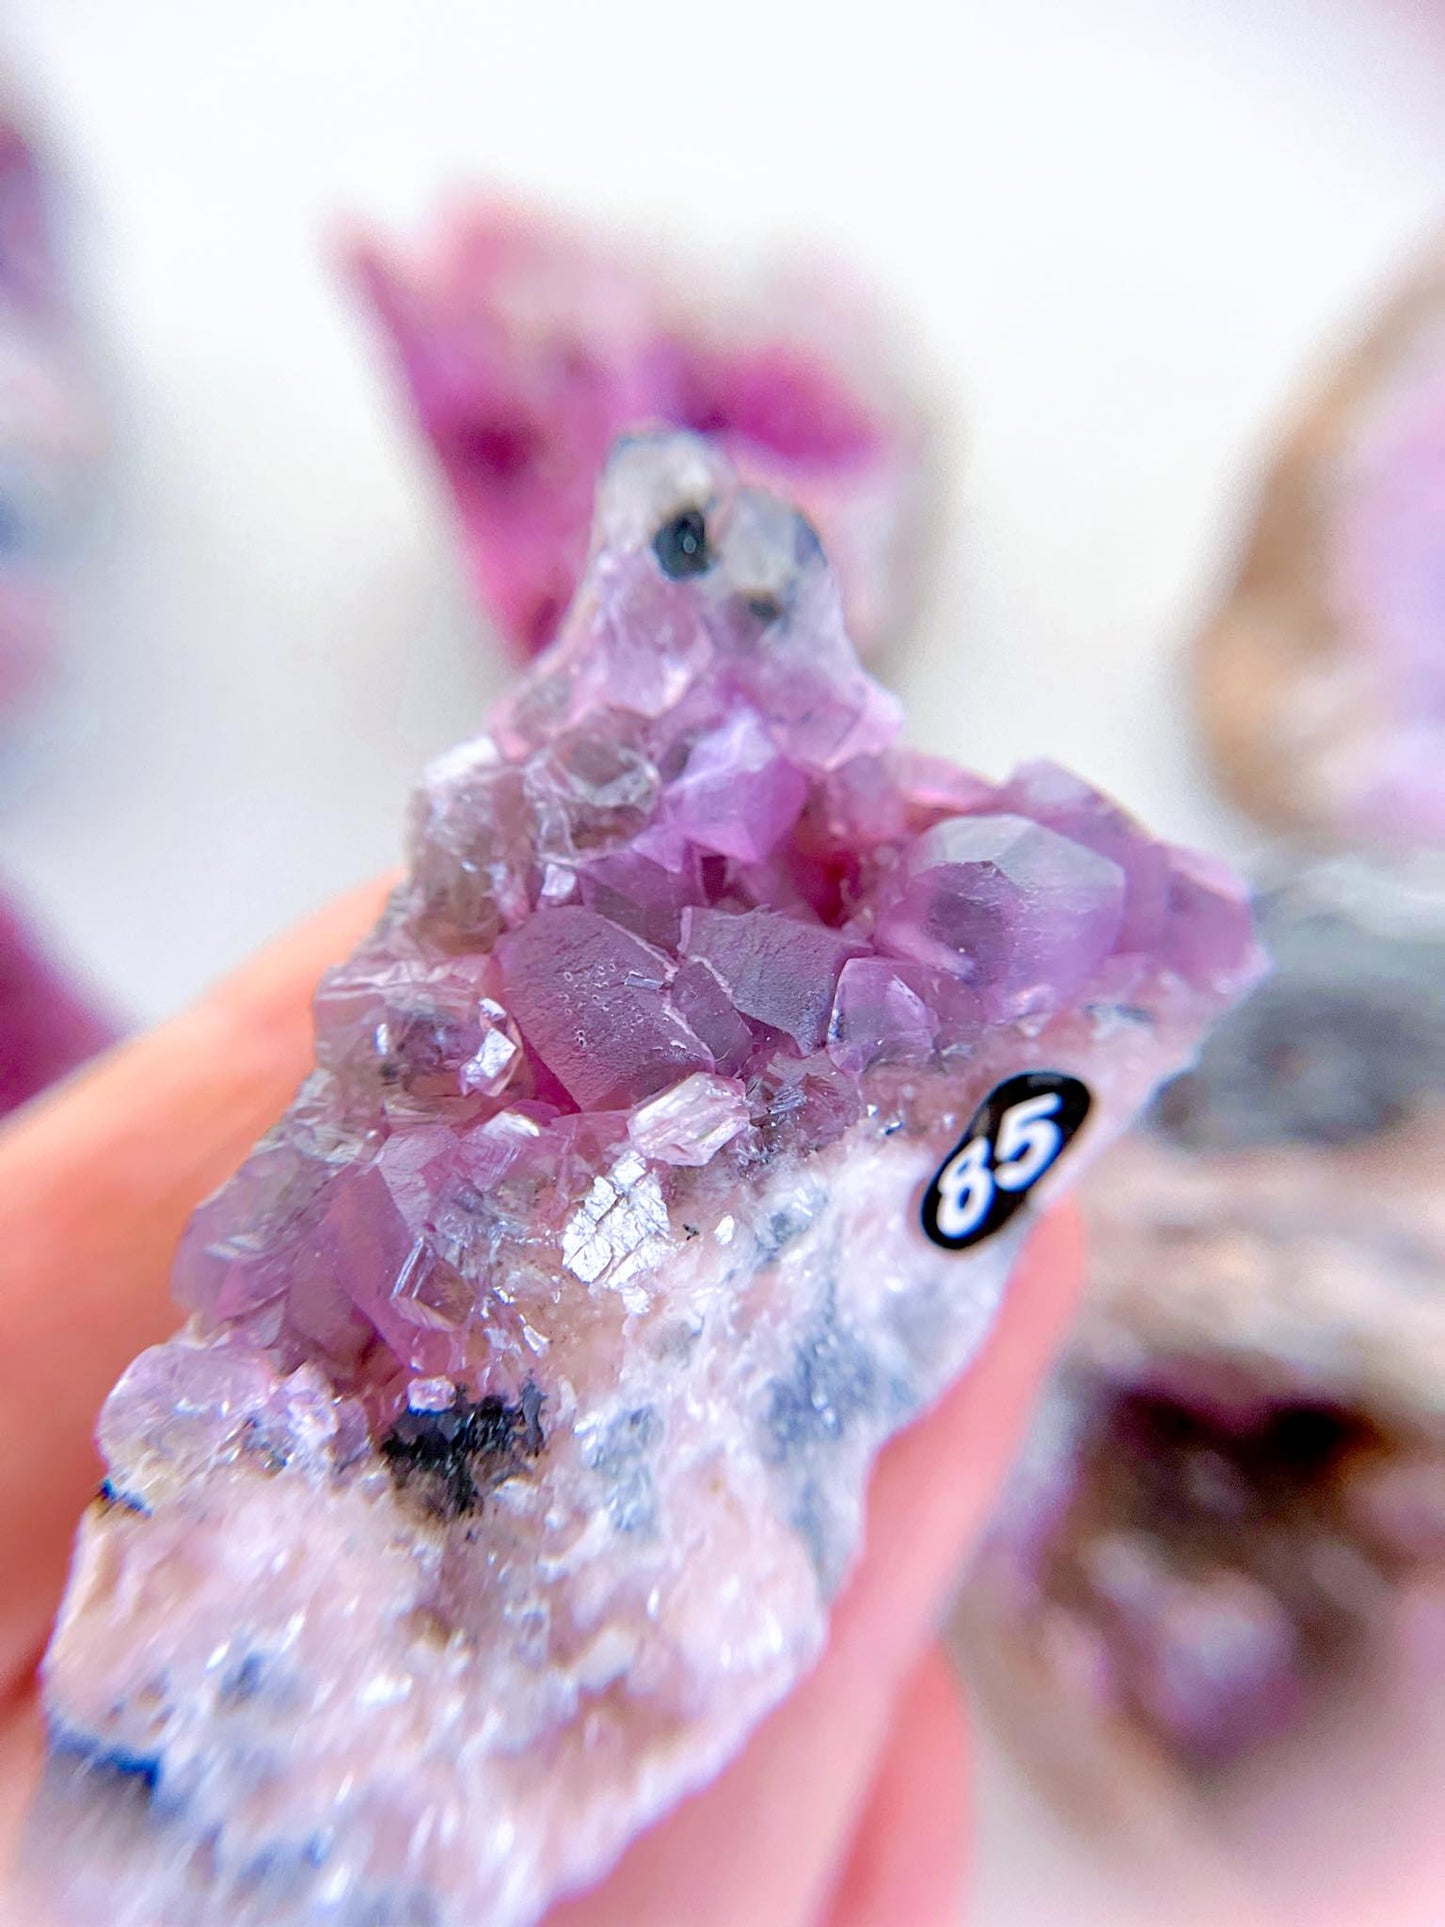 Hot and Jucy Pink Cobalto Calcite Specimen [85]- aus Marokko High Quality